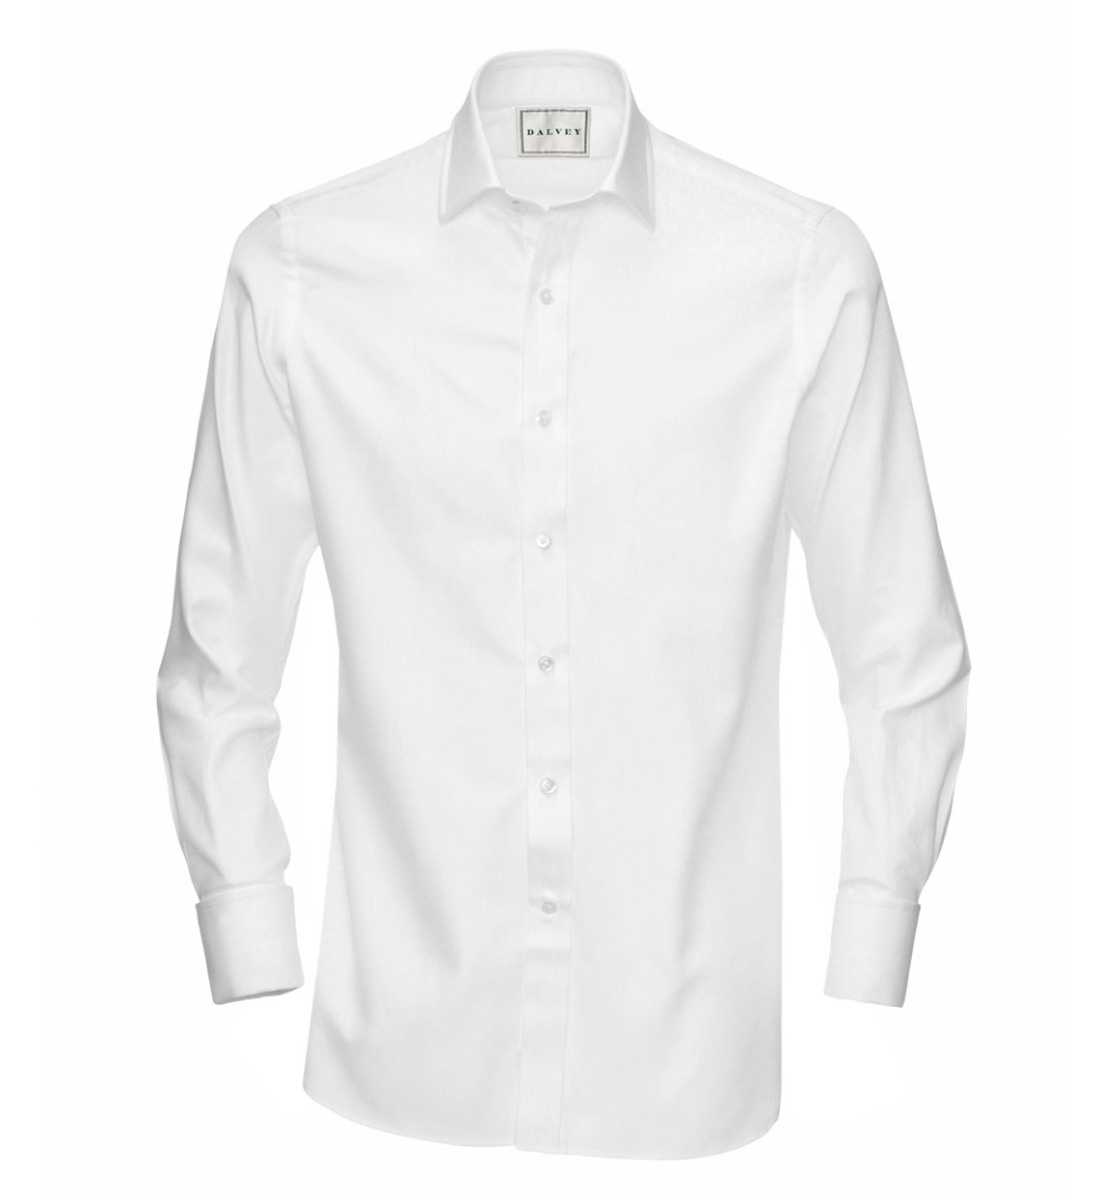 Shirt Double Cuff Solid White Herringbone Twill - Dalvey